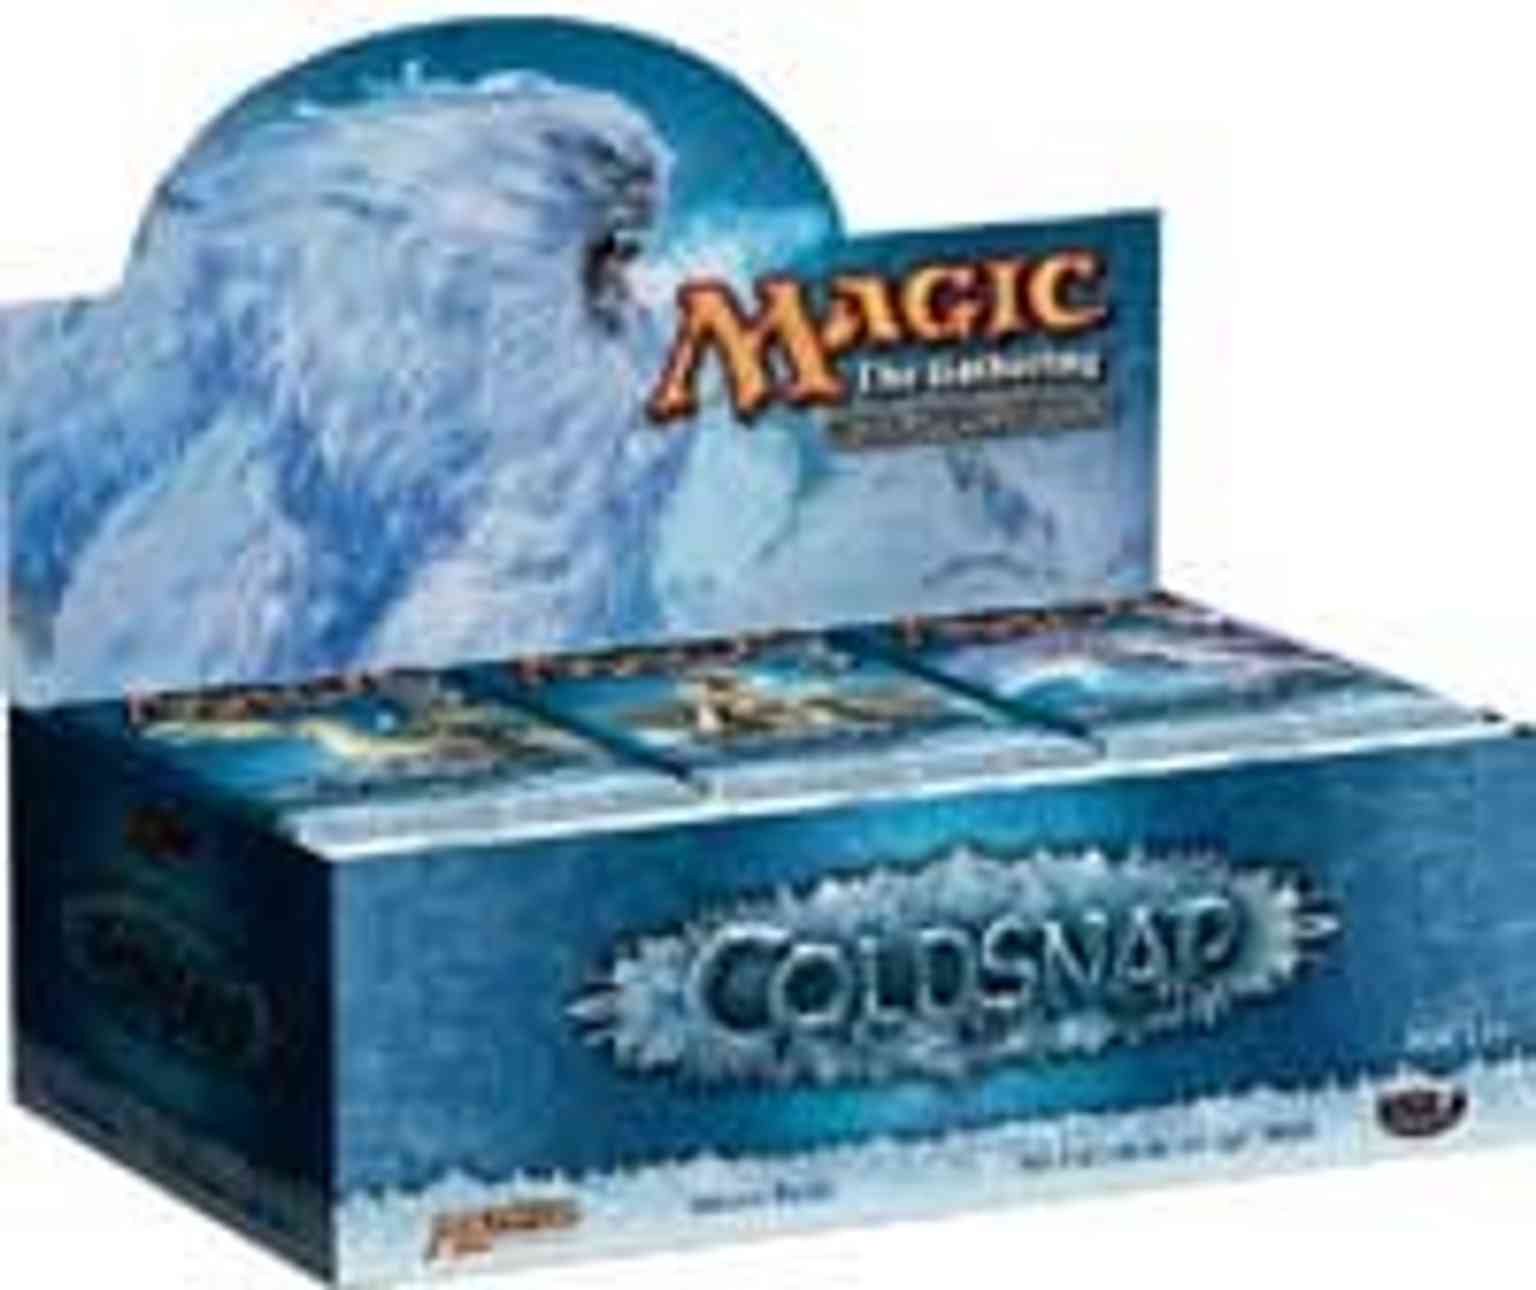 Coldsnap - Booster Box magic card front